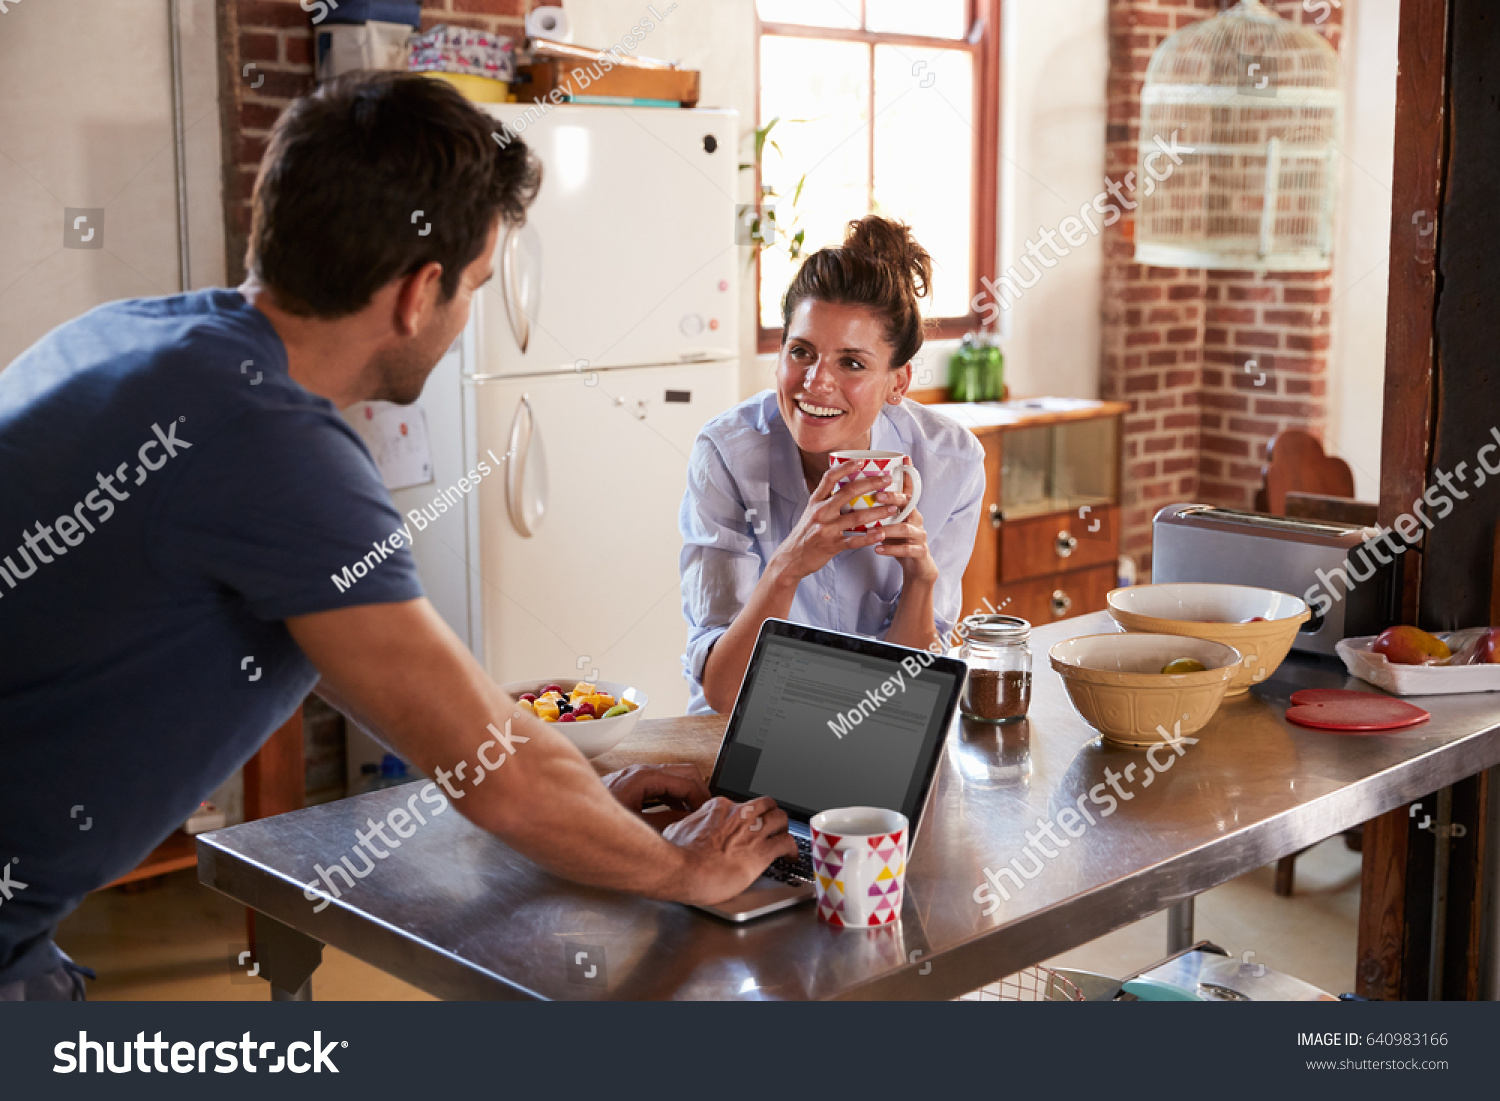 Happy Hispanic couple using computer in kitchen, waist up #640983166